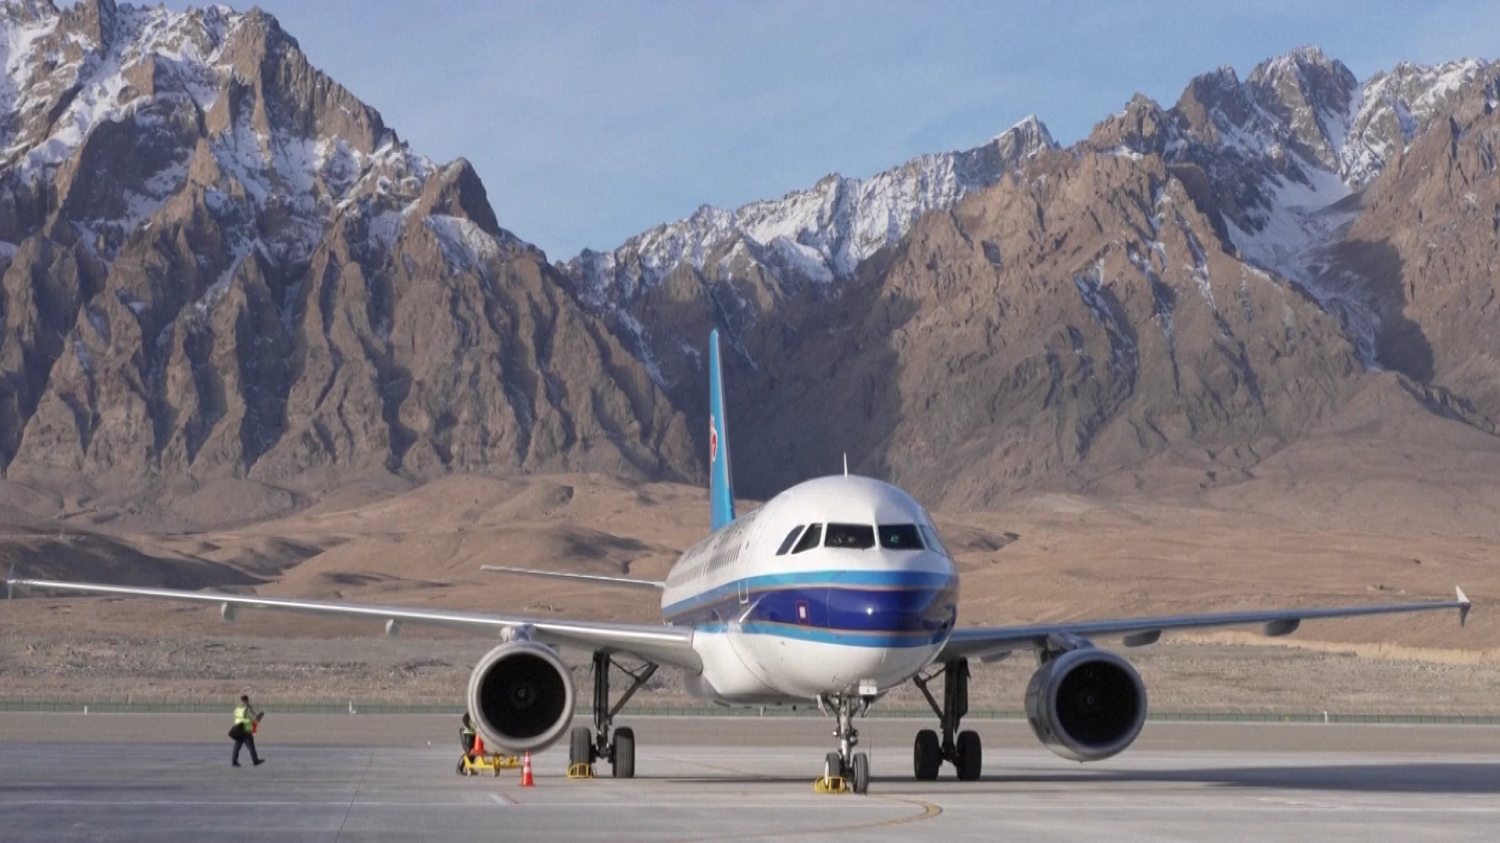 A plane lands at the Tashkurgan Khunjerab airport in Northwest China’s Xinjiang Uygur Autonomous Region on December 23, 2022. Photo: VCG